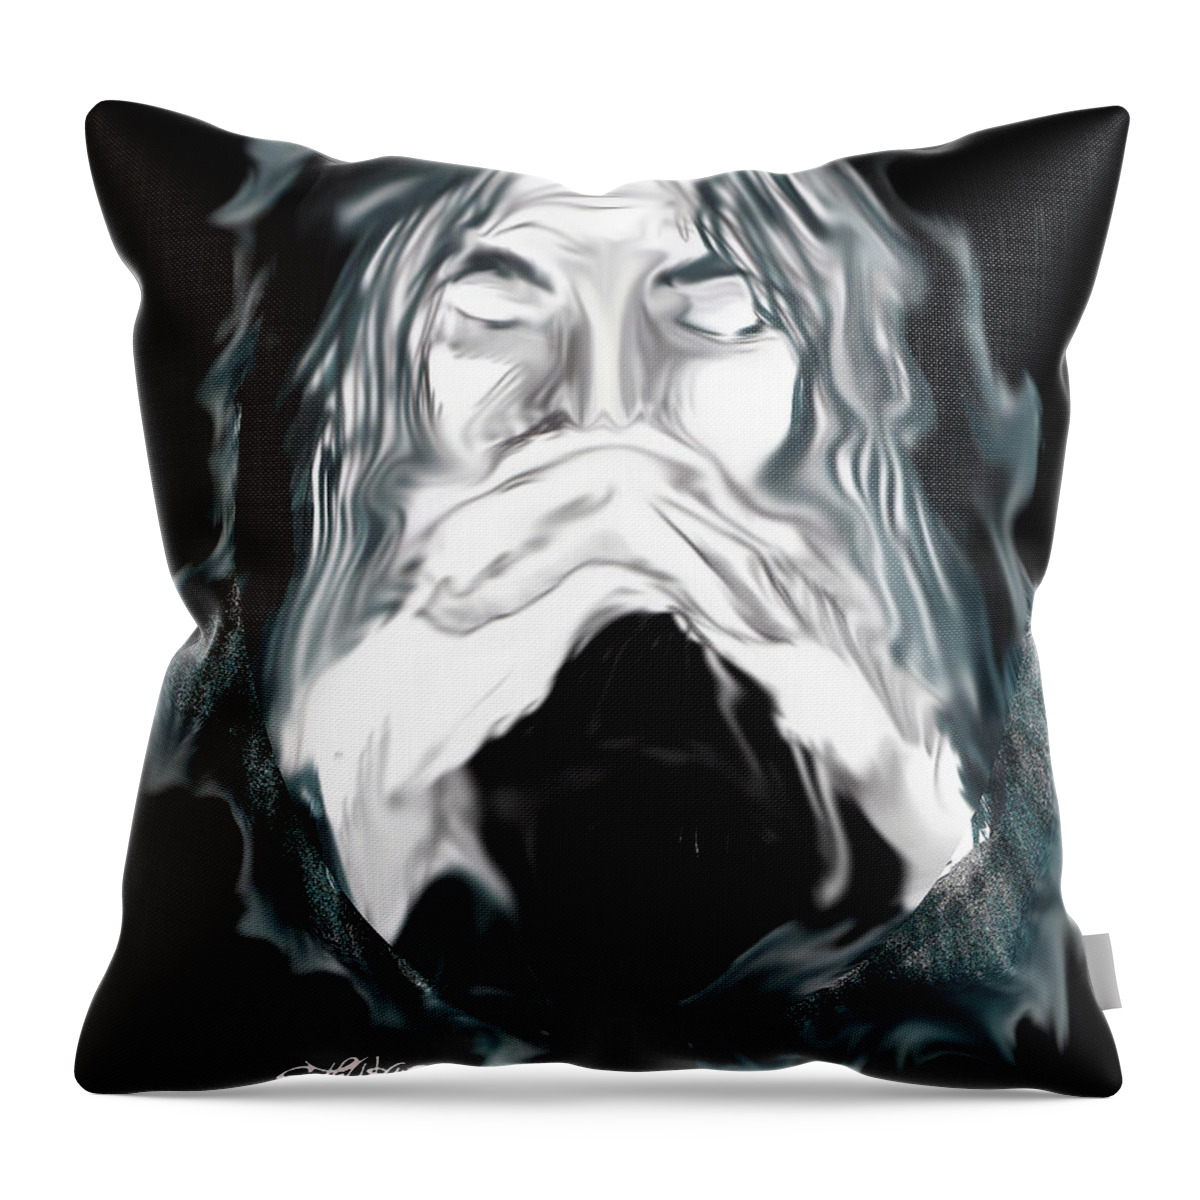 John The Baptist Praying Throw Pillow featuring the digital art John the Baptist Praying by Seth Weaver